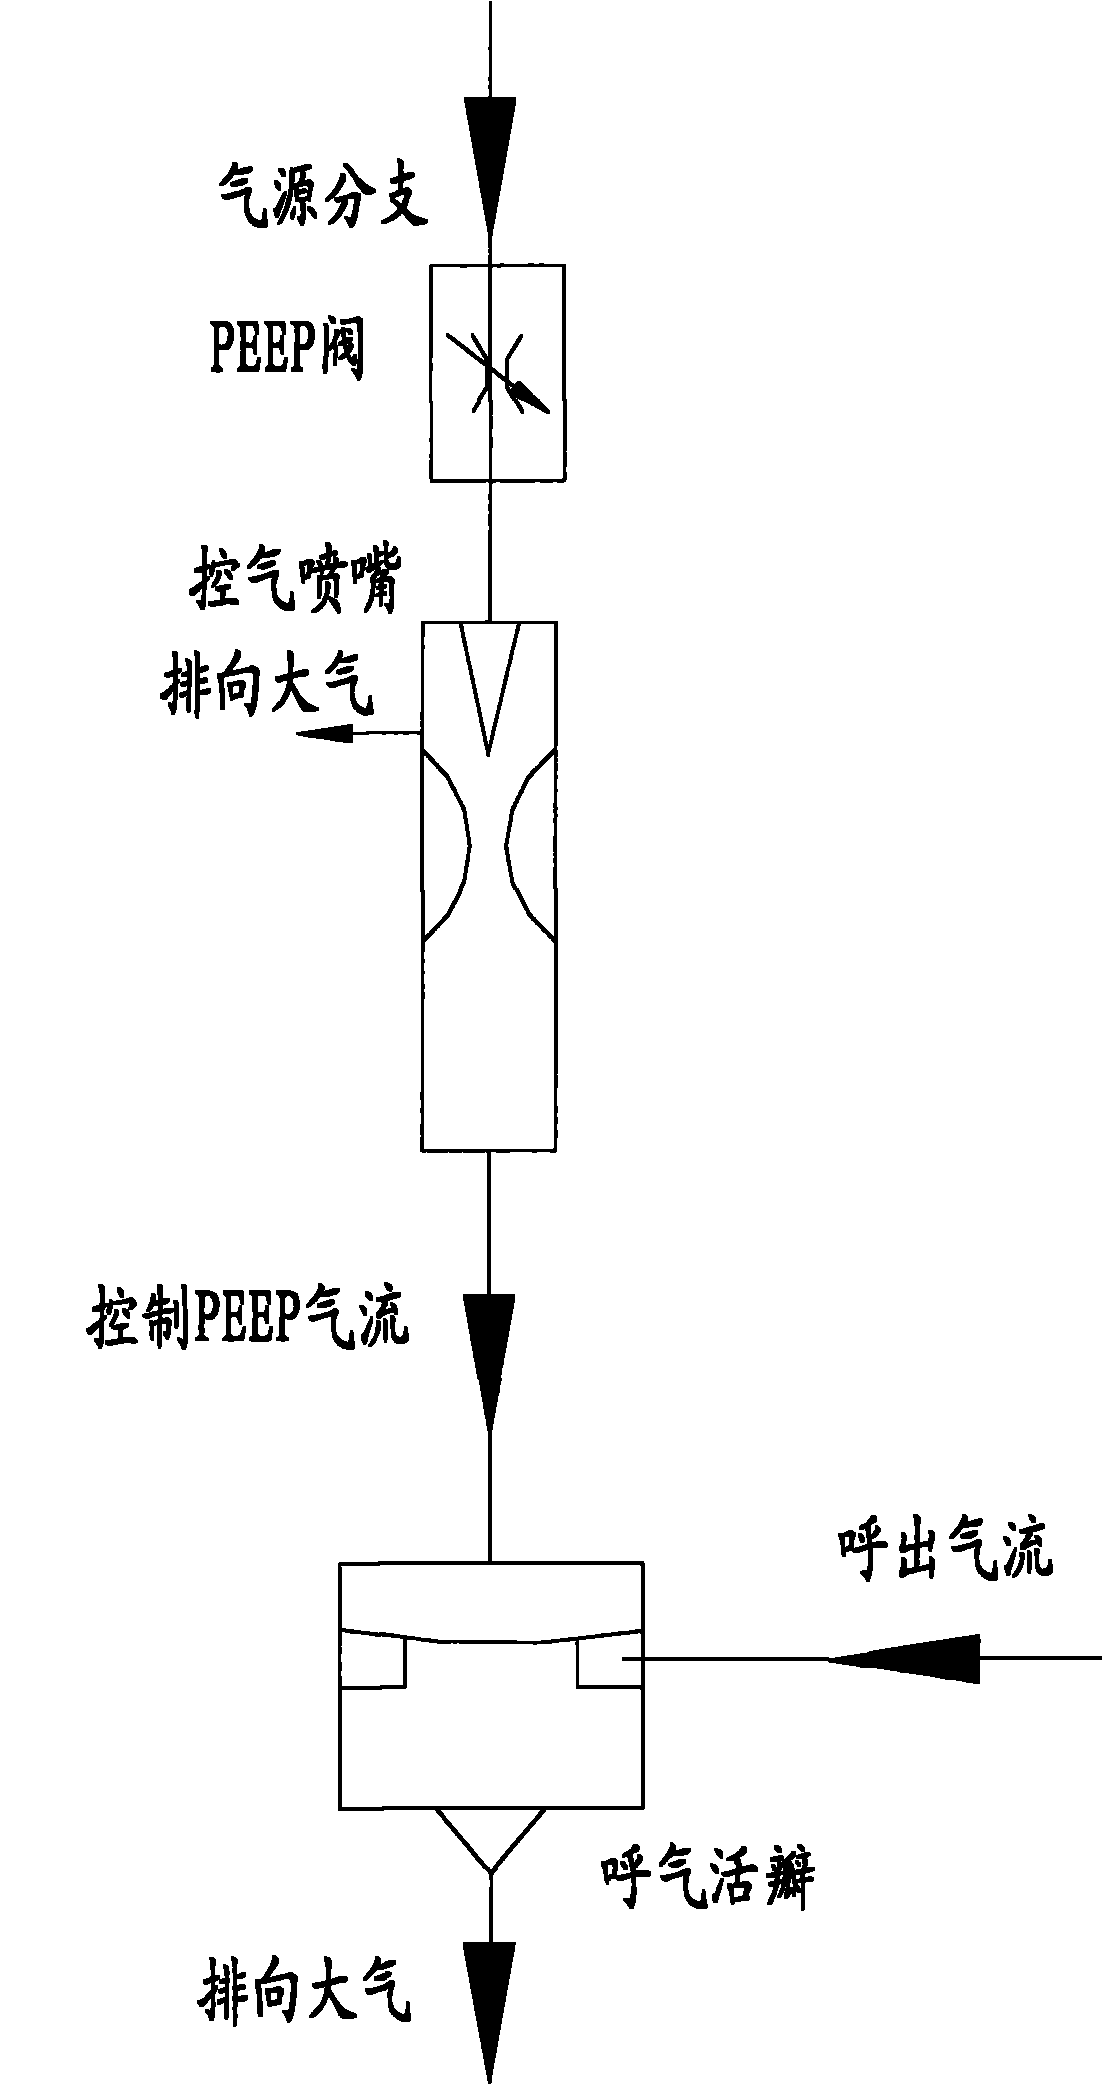 PEEP (positive end expiratory pressure) valve and respirator with same